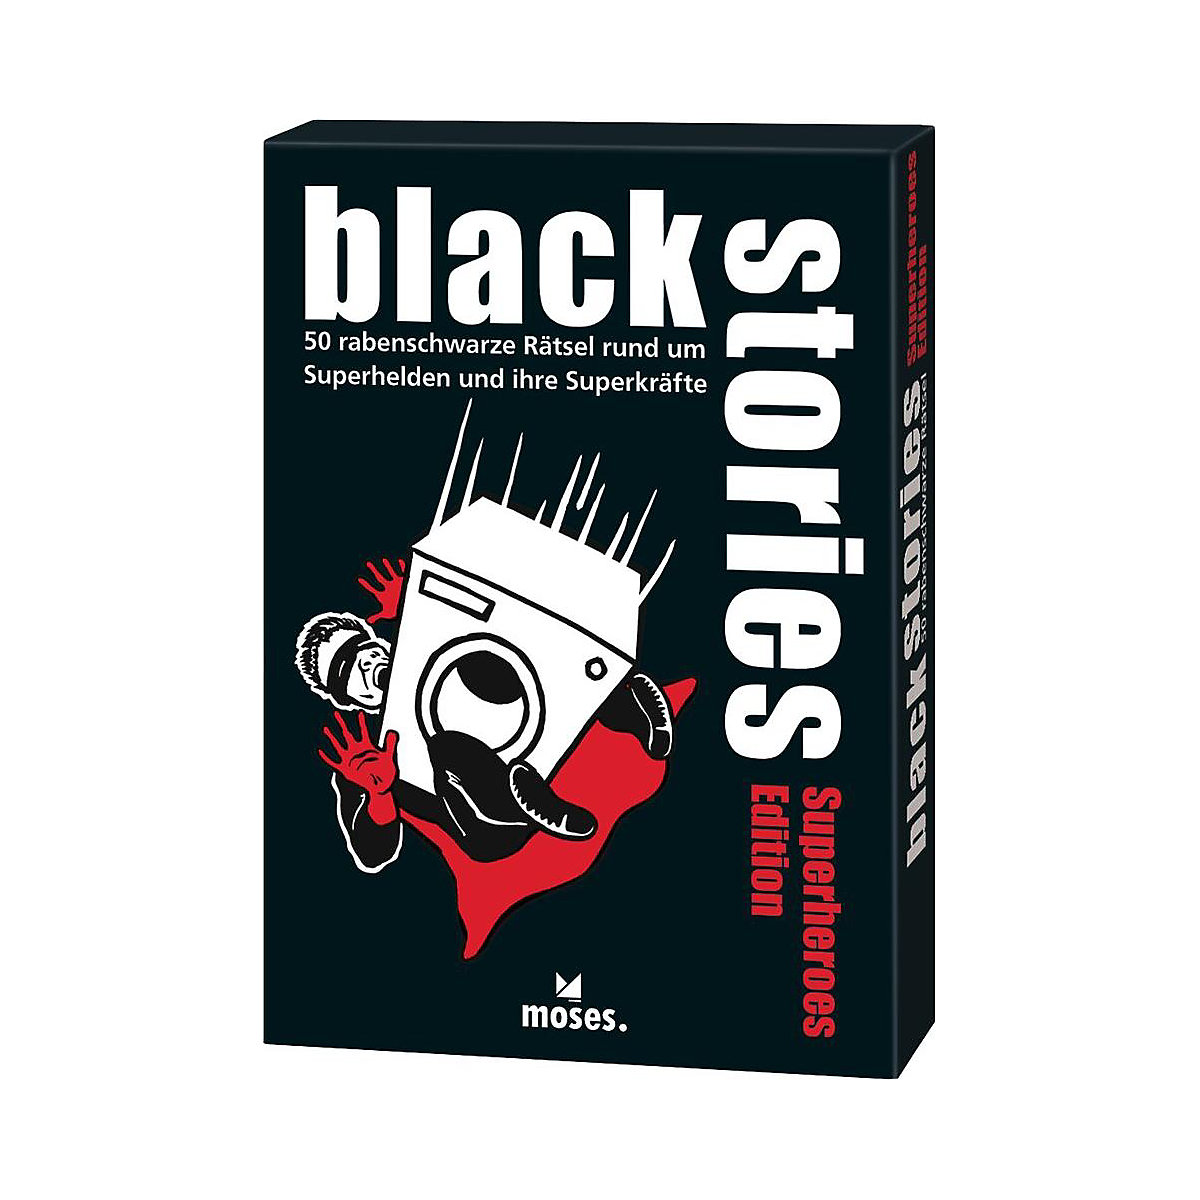 moses. Verlag Black Stories Superheroes Edition (Spiel)